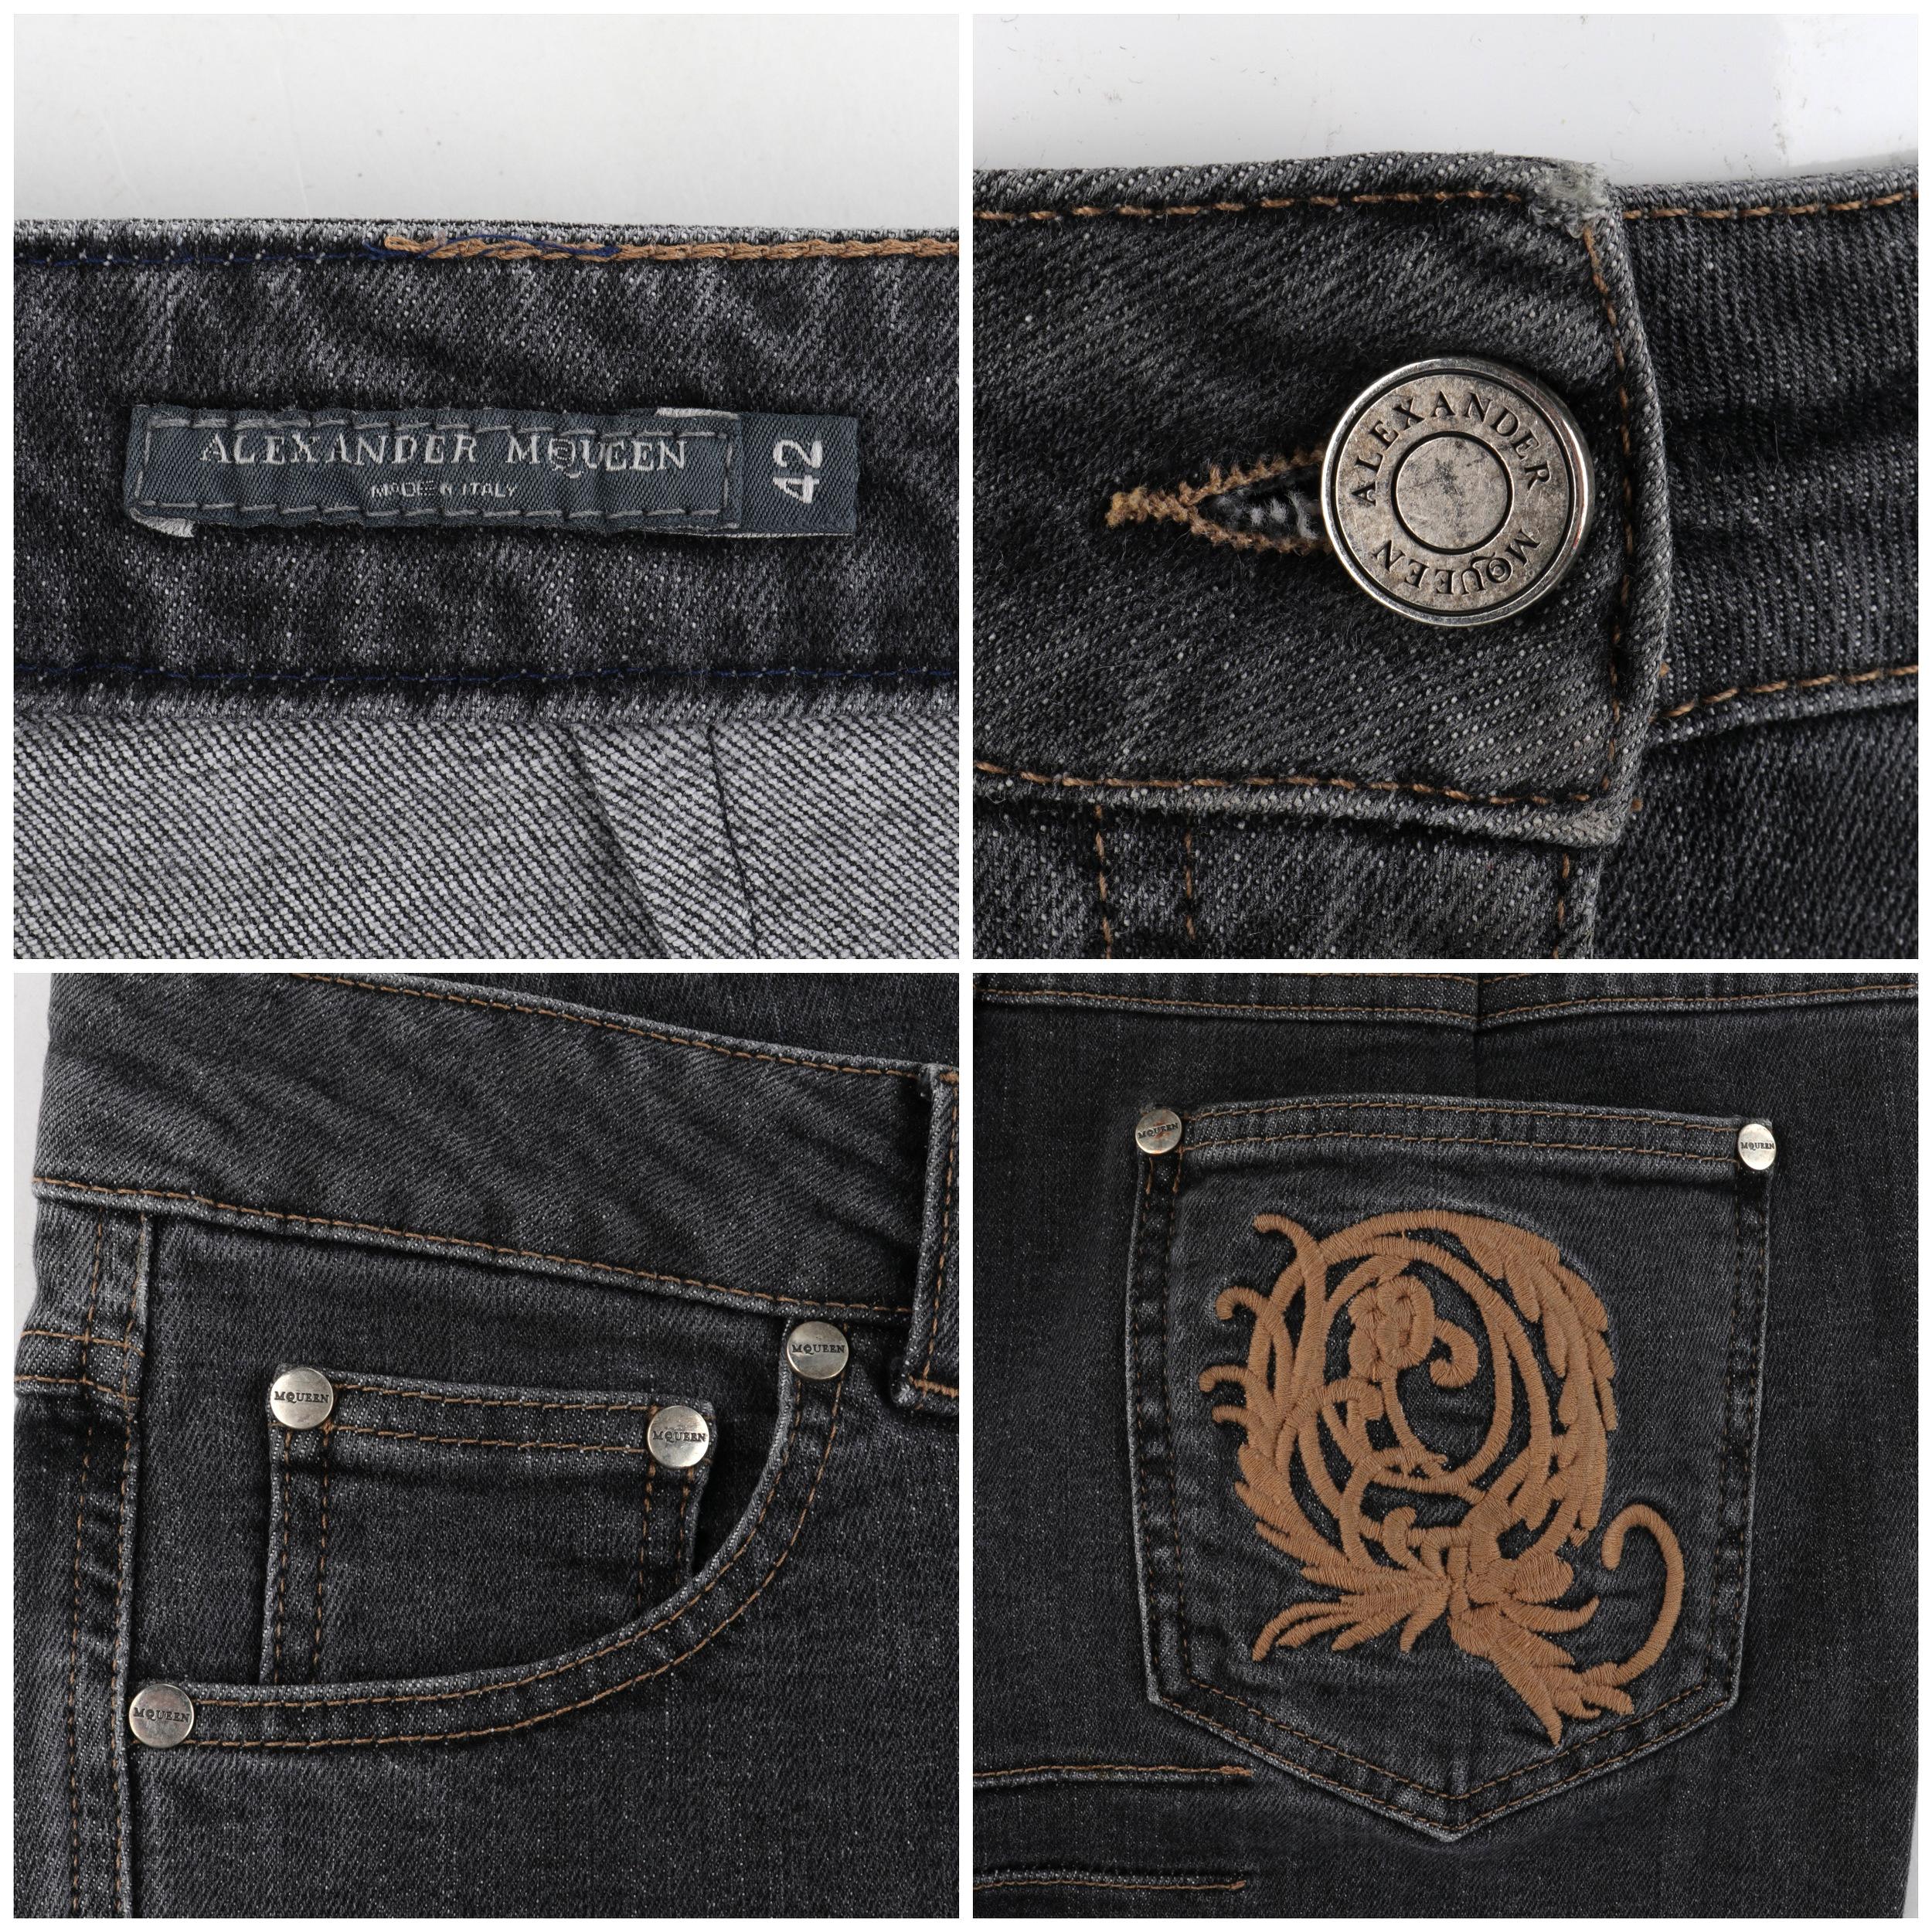 Black ALEXANDER McQUEEN S/S 2007 “Saraband” Grey Low Rise Skinny Jeans Pants